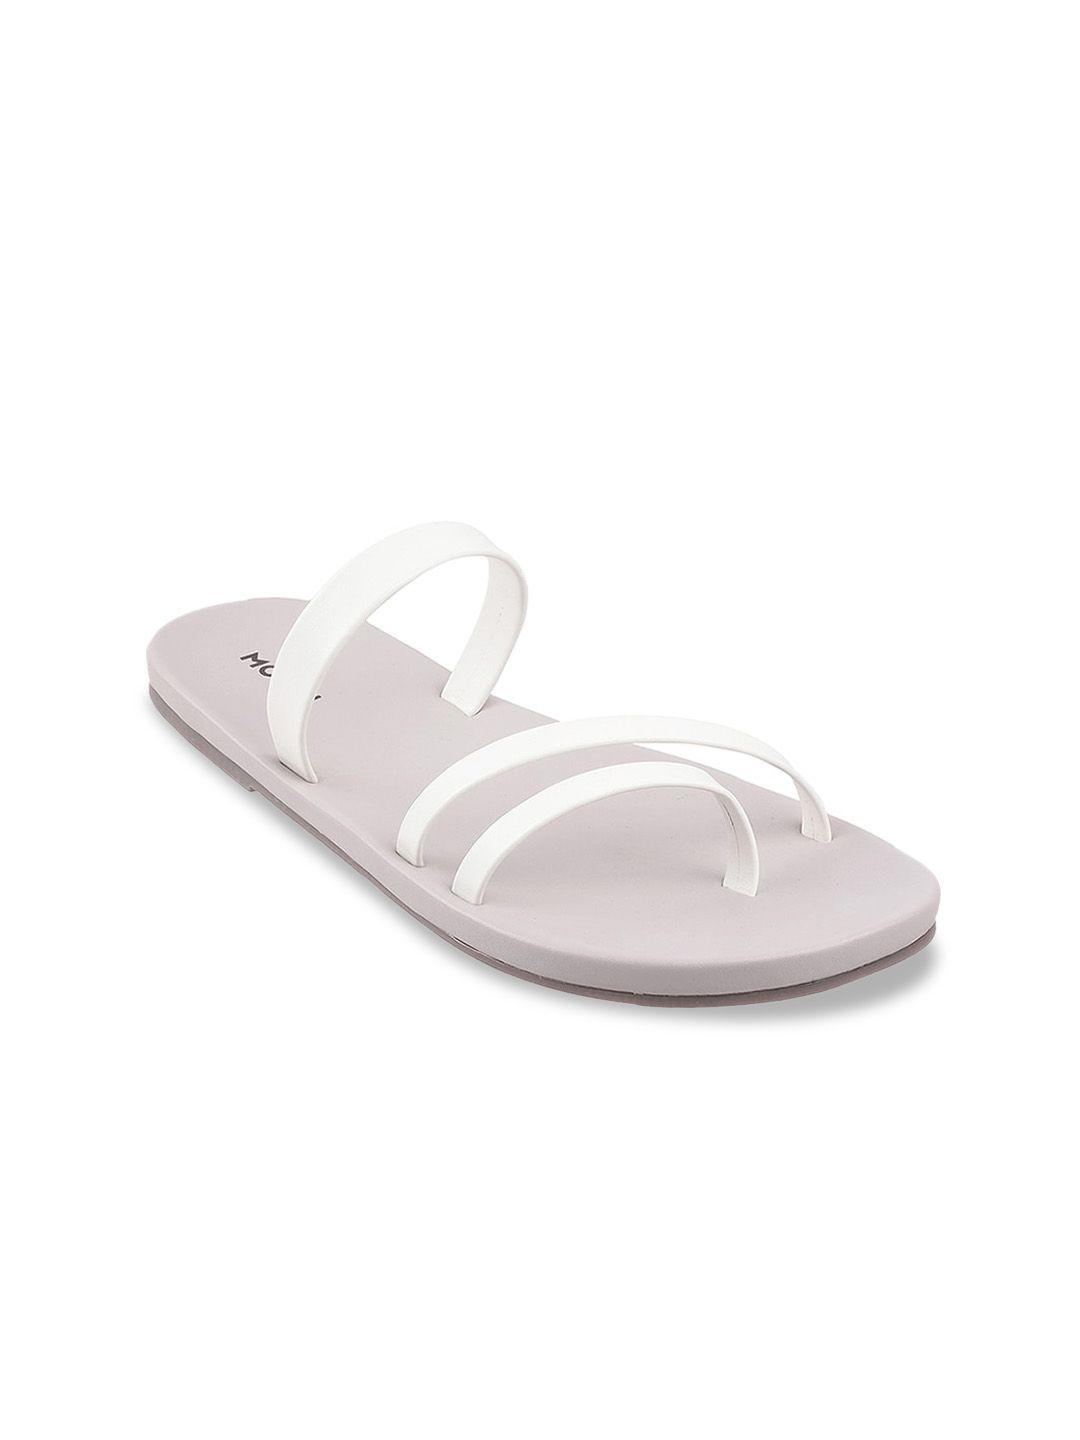 mochi women white solid one toe flats